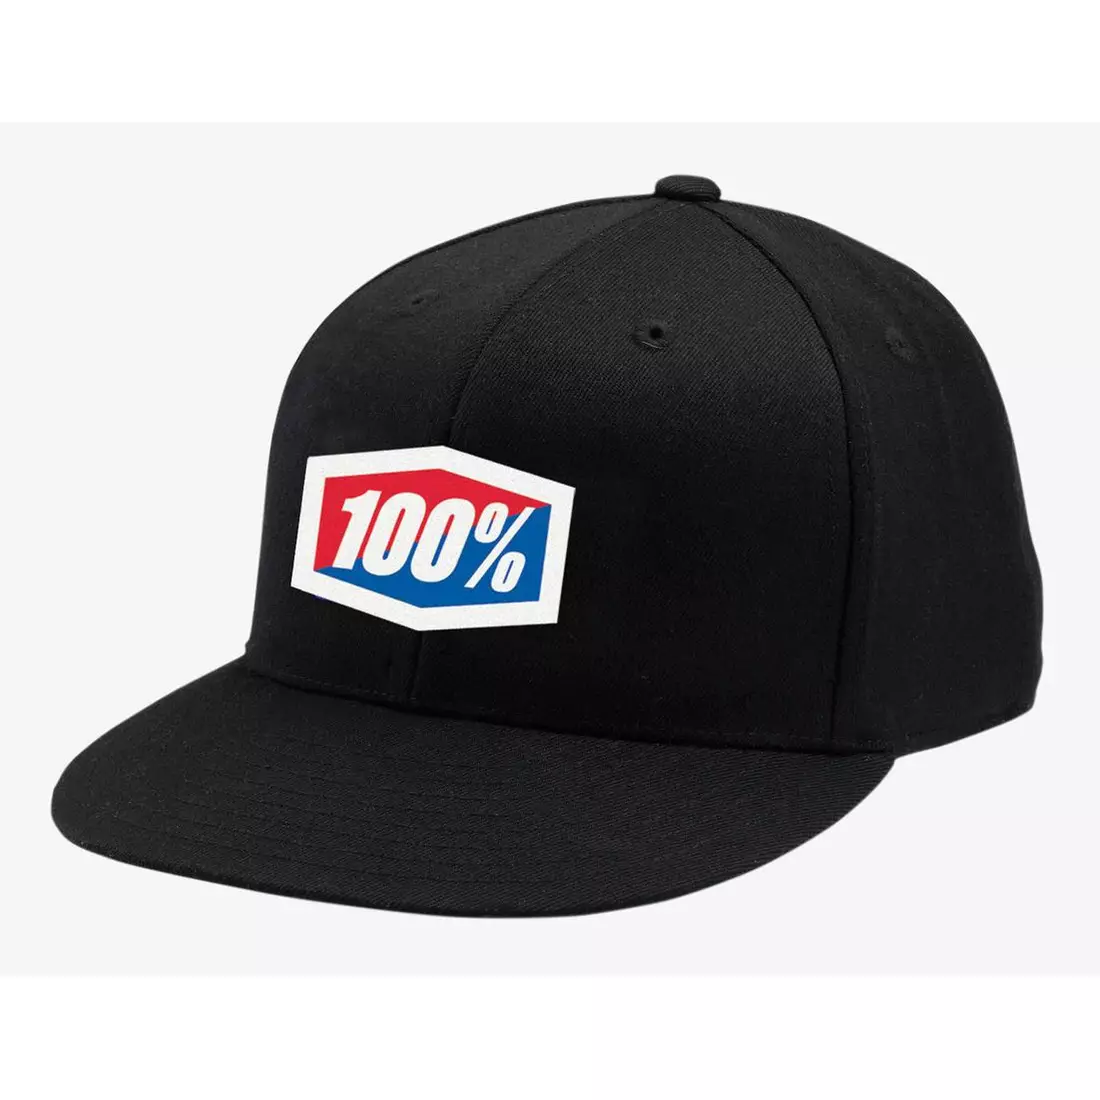 100% baseball cap official J-Fit flexfit hat black STO-20040-001-17